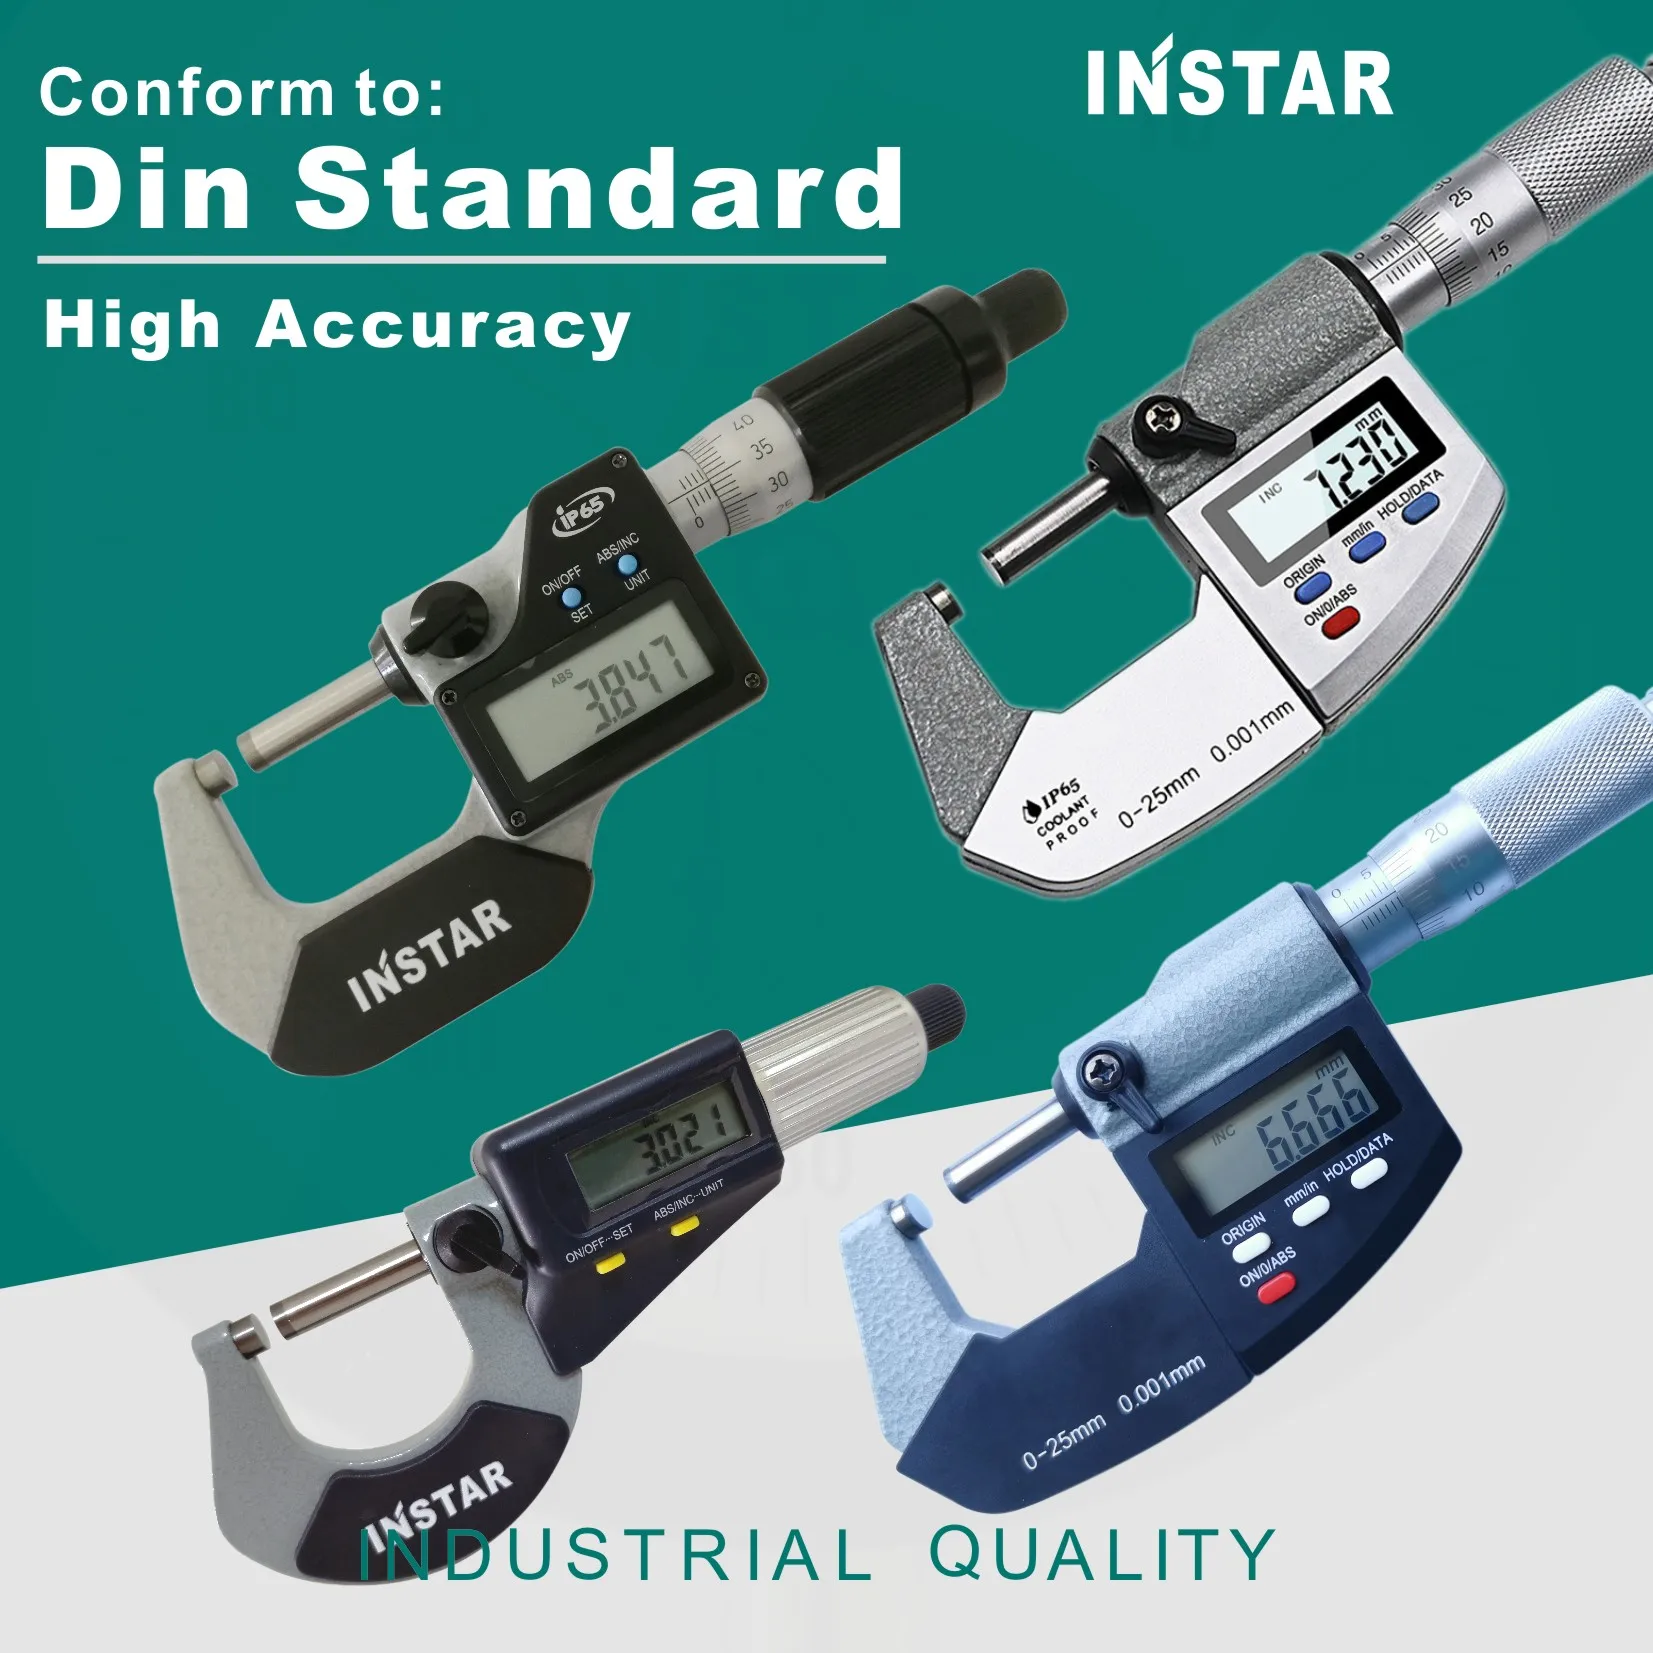 

INSTAR Digital Micrometer Micron High Accuracy 0-25mm 0.001mm DIN Standard Industrial Quality 25-50mm 50-75mm 75-100mm 0.001mm